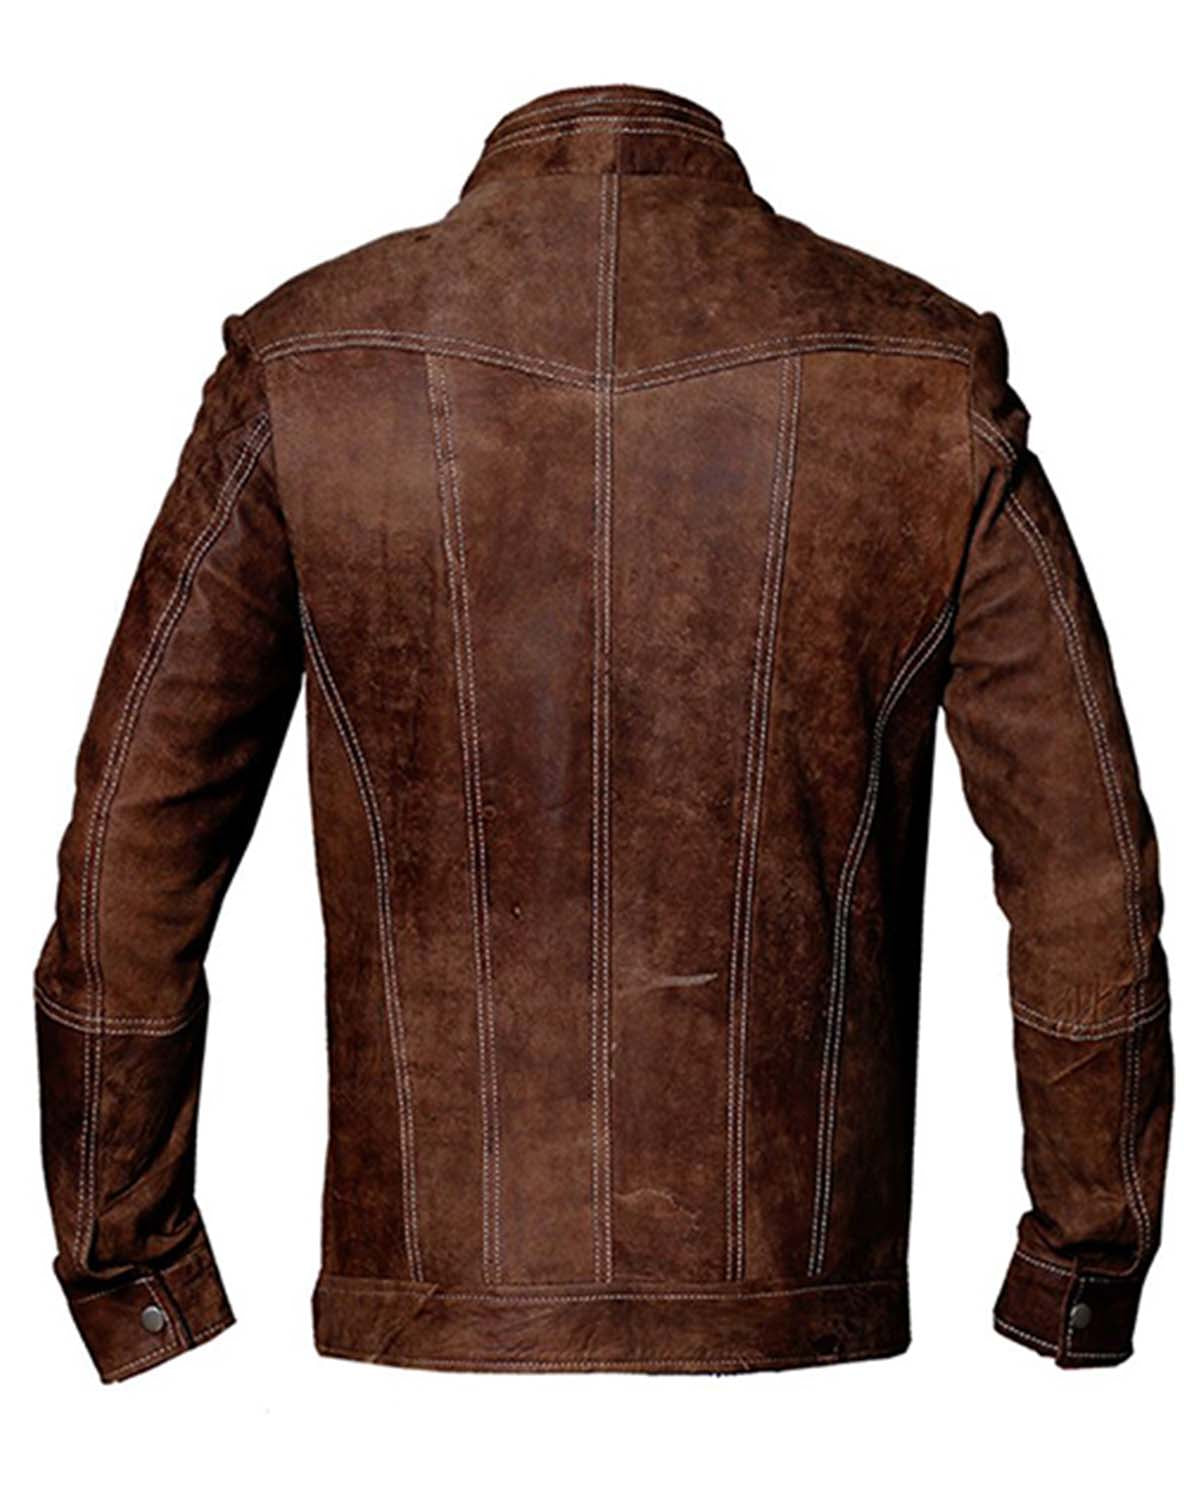 Long Sleeves Italian Motorcycle Brown Leather Jackets